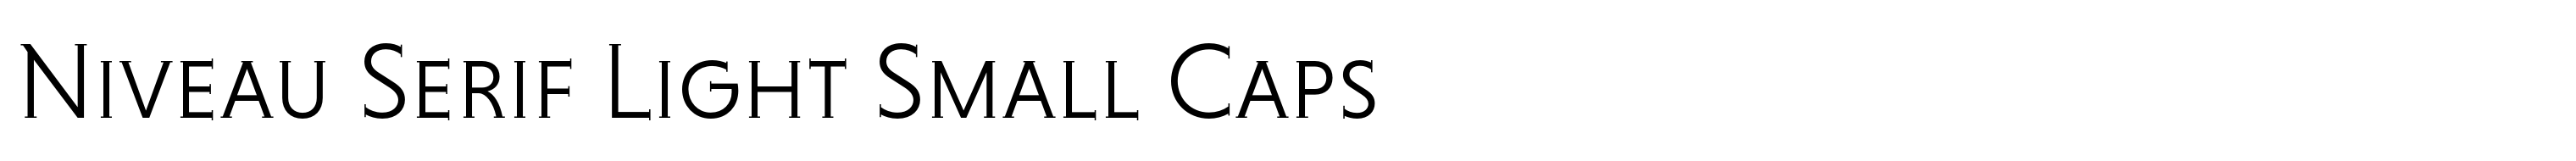 Niveau Serif Light Small Caps